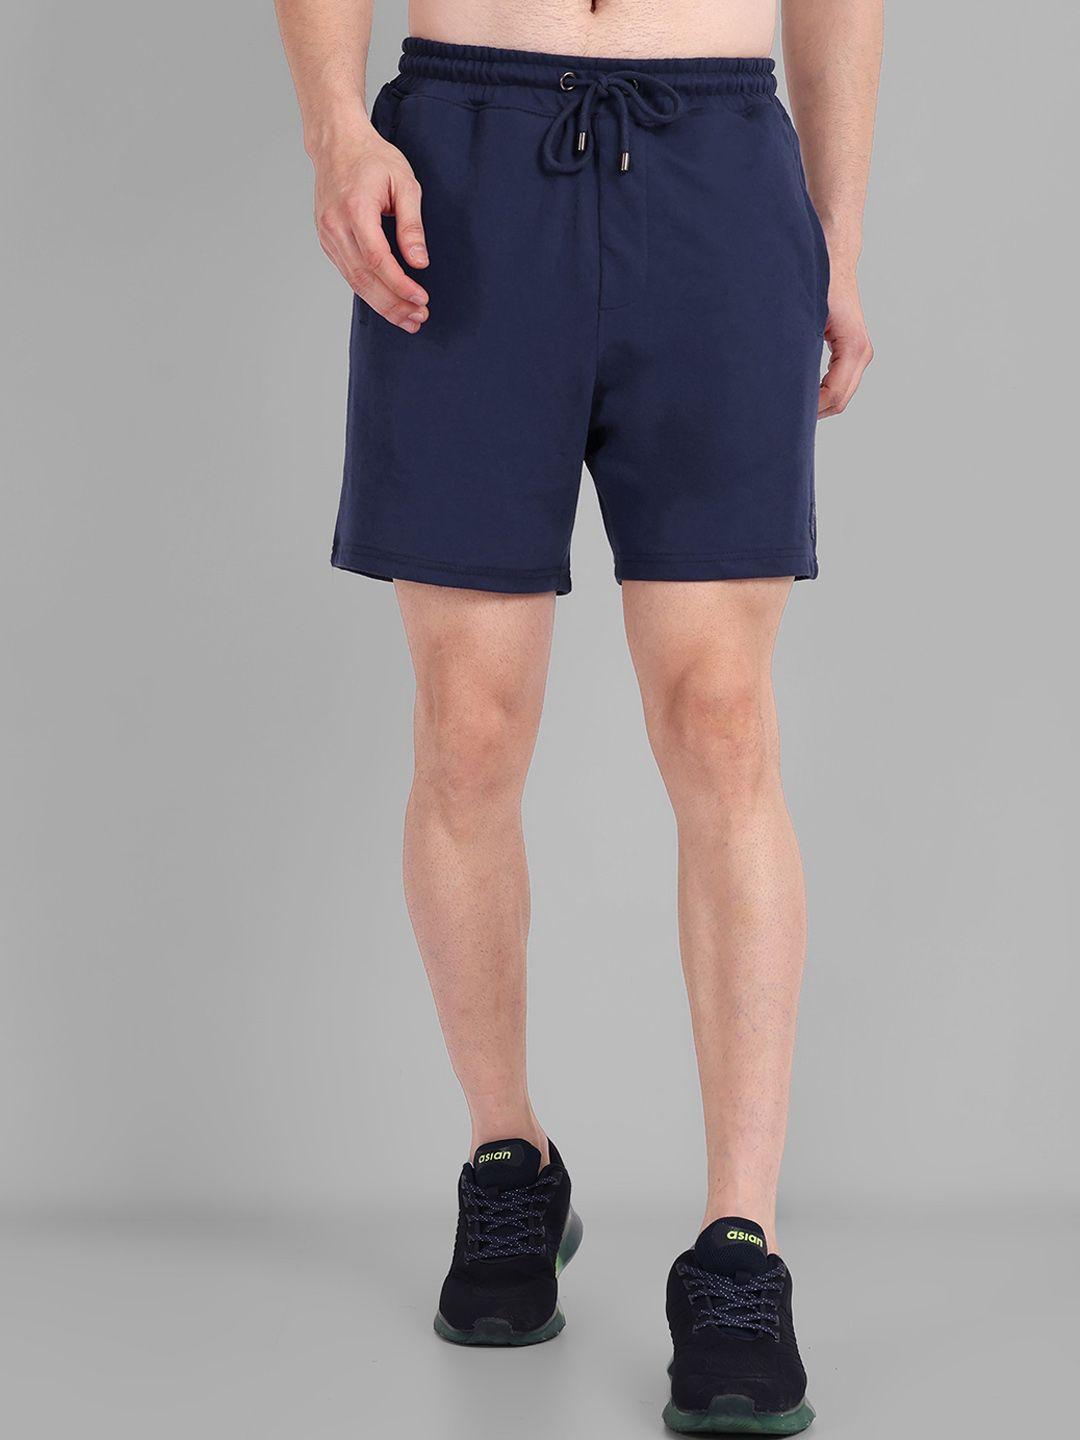 tomhiddle men sports shorts